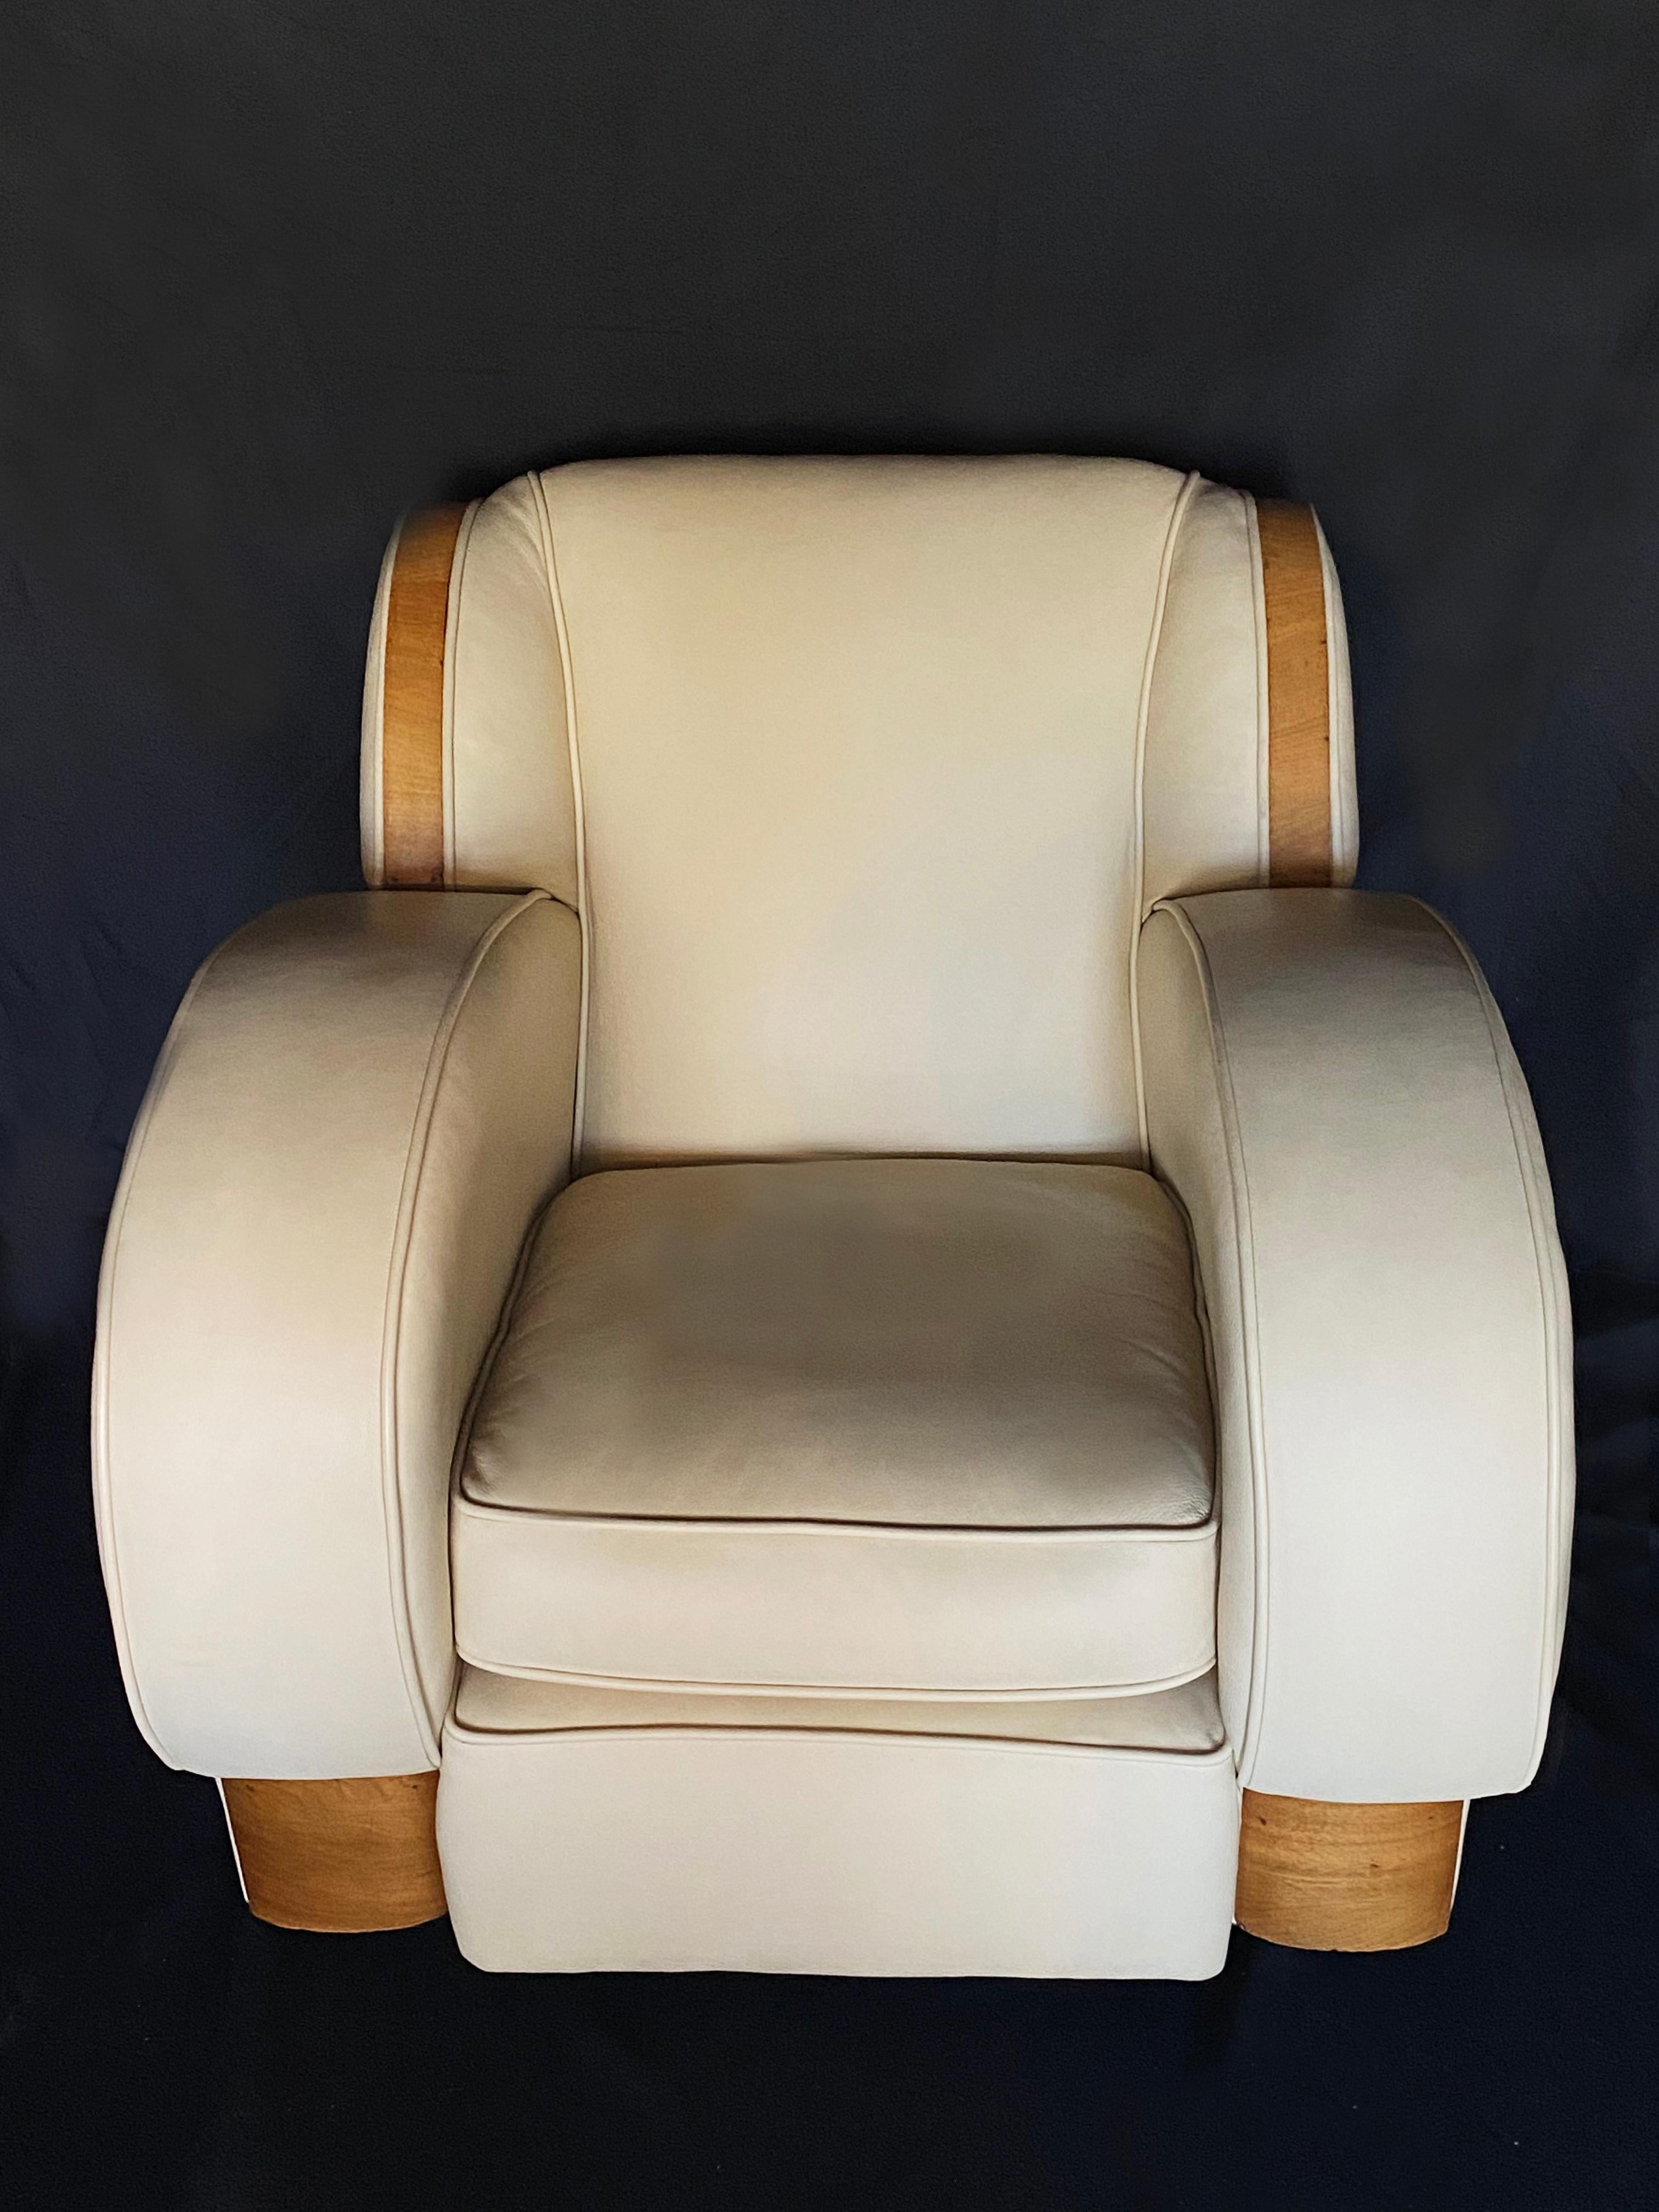 European 1950's Pair of Cream & Oak Veneer Leather Art Deco Style Club Chairs For Sale